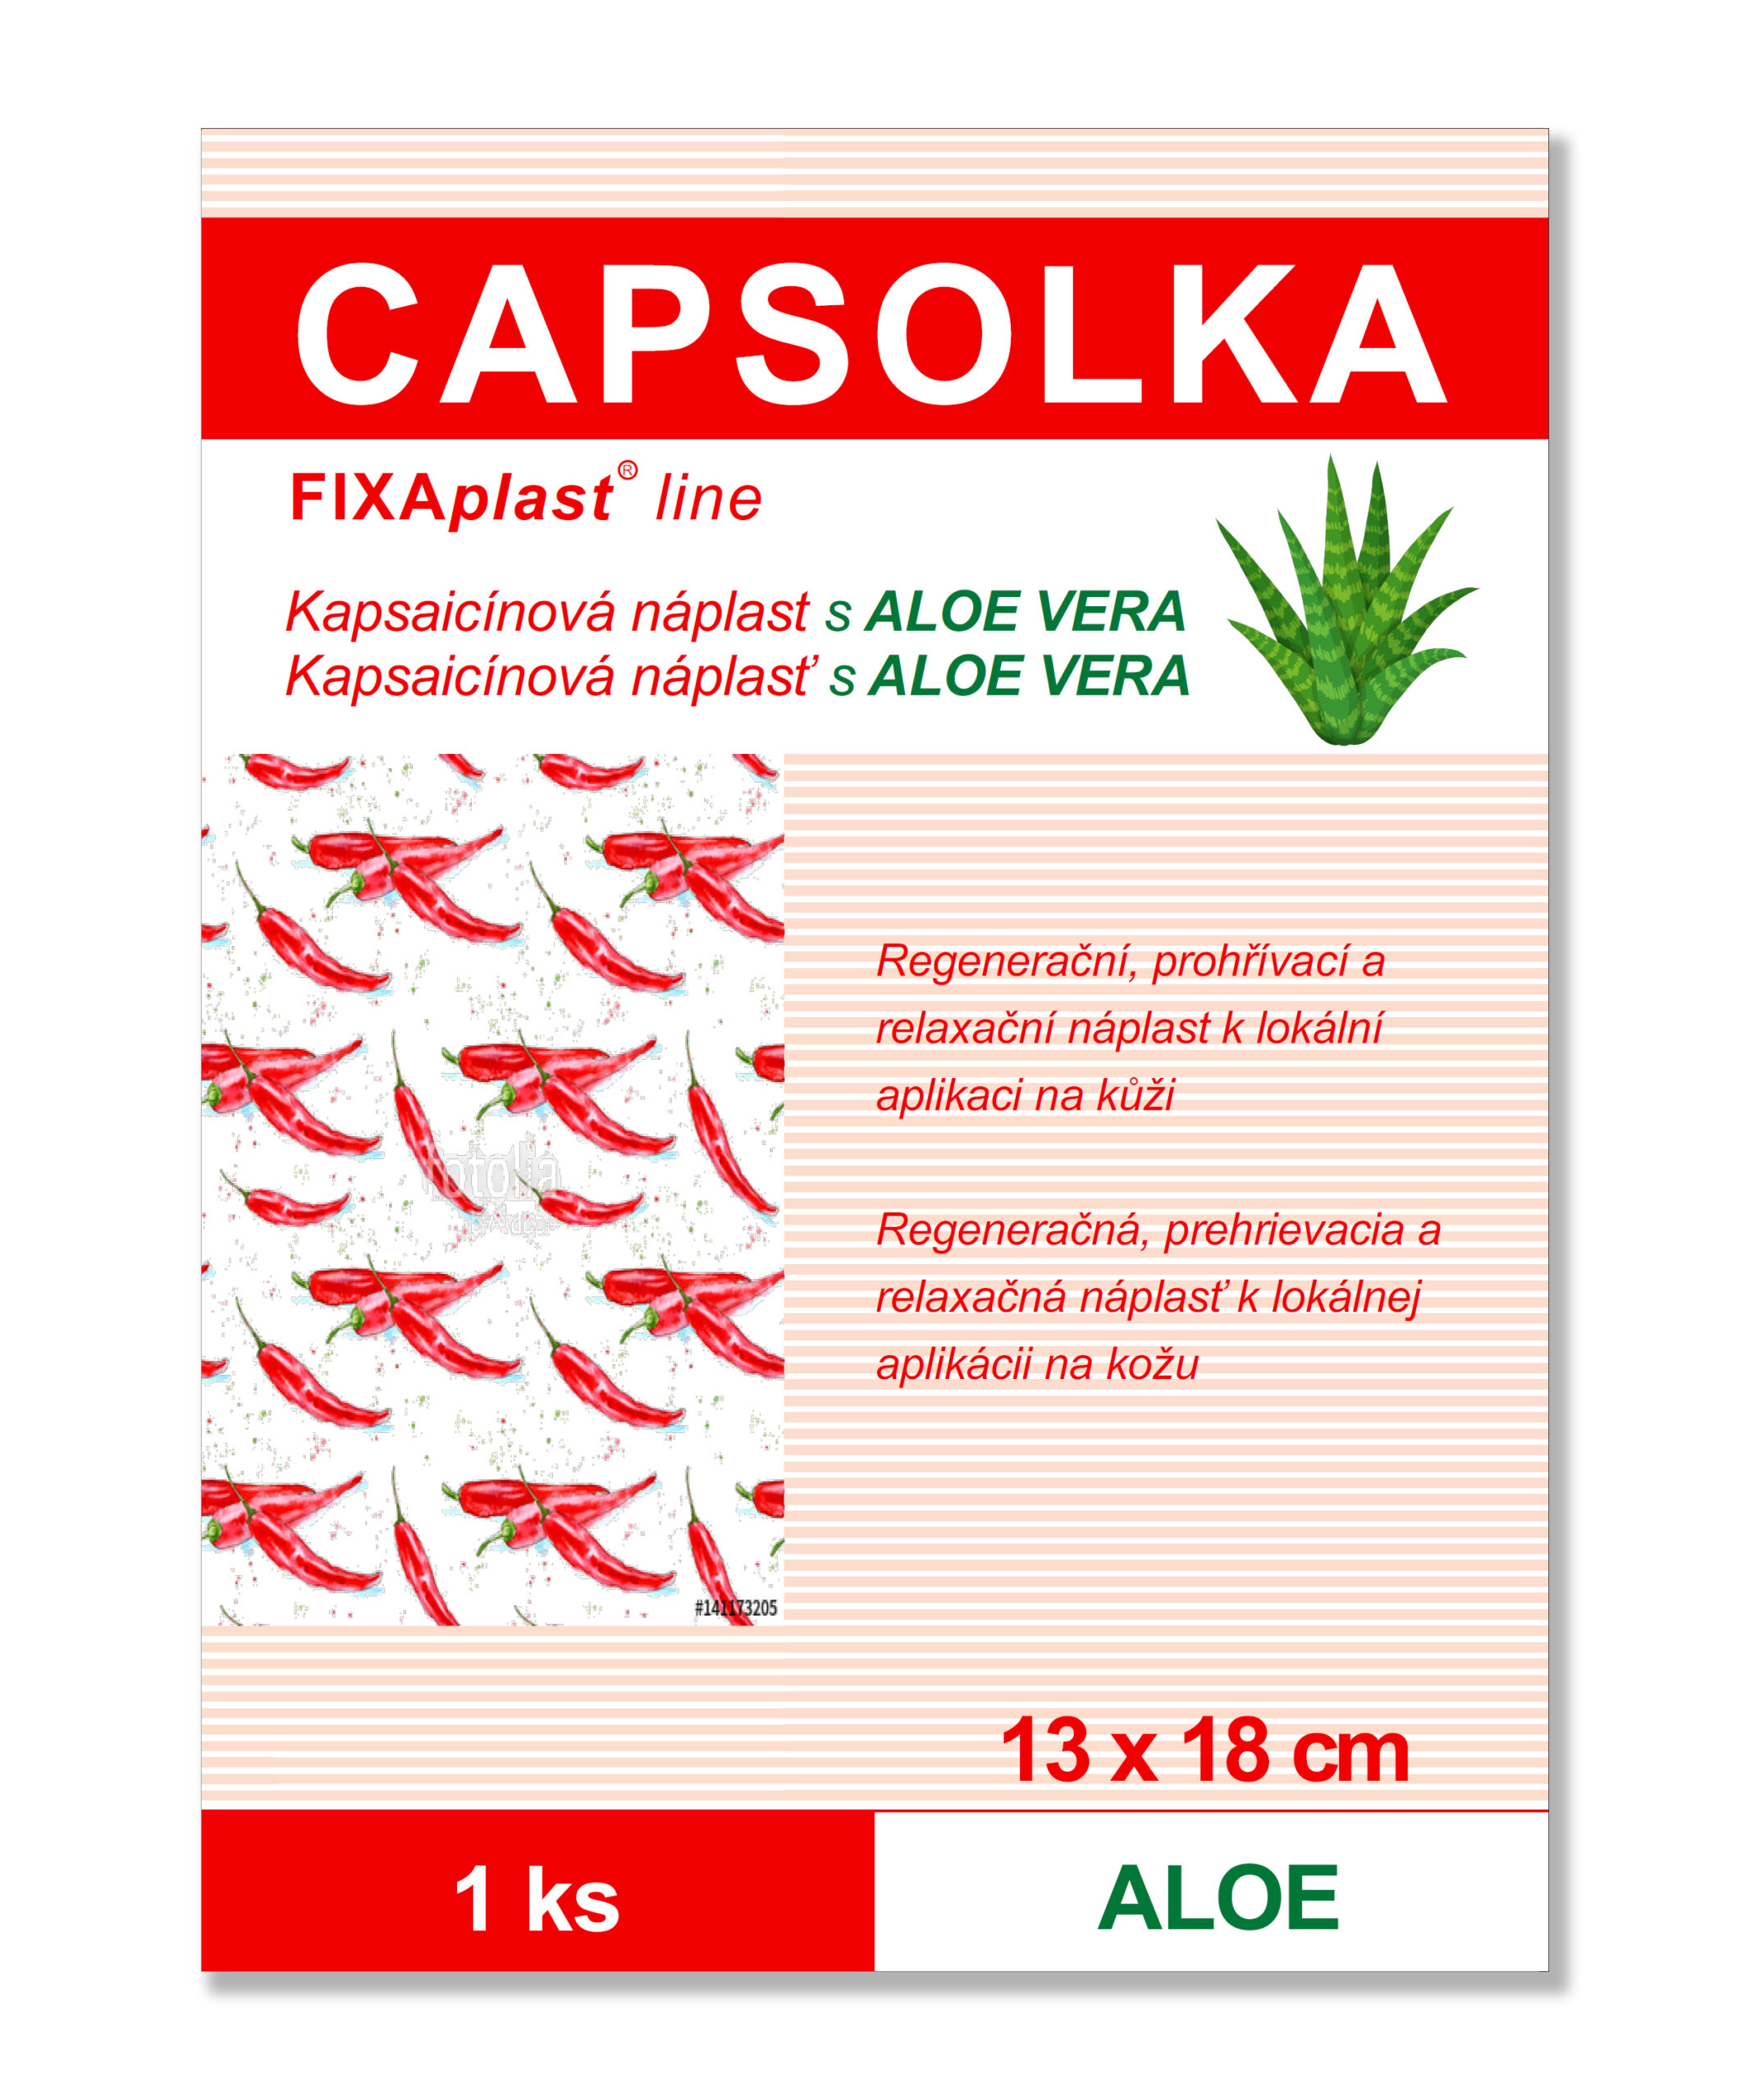 Capsolka Kapsaicínová náplast s Aloe vera 13x18 cm